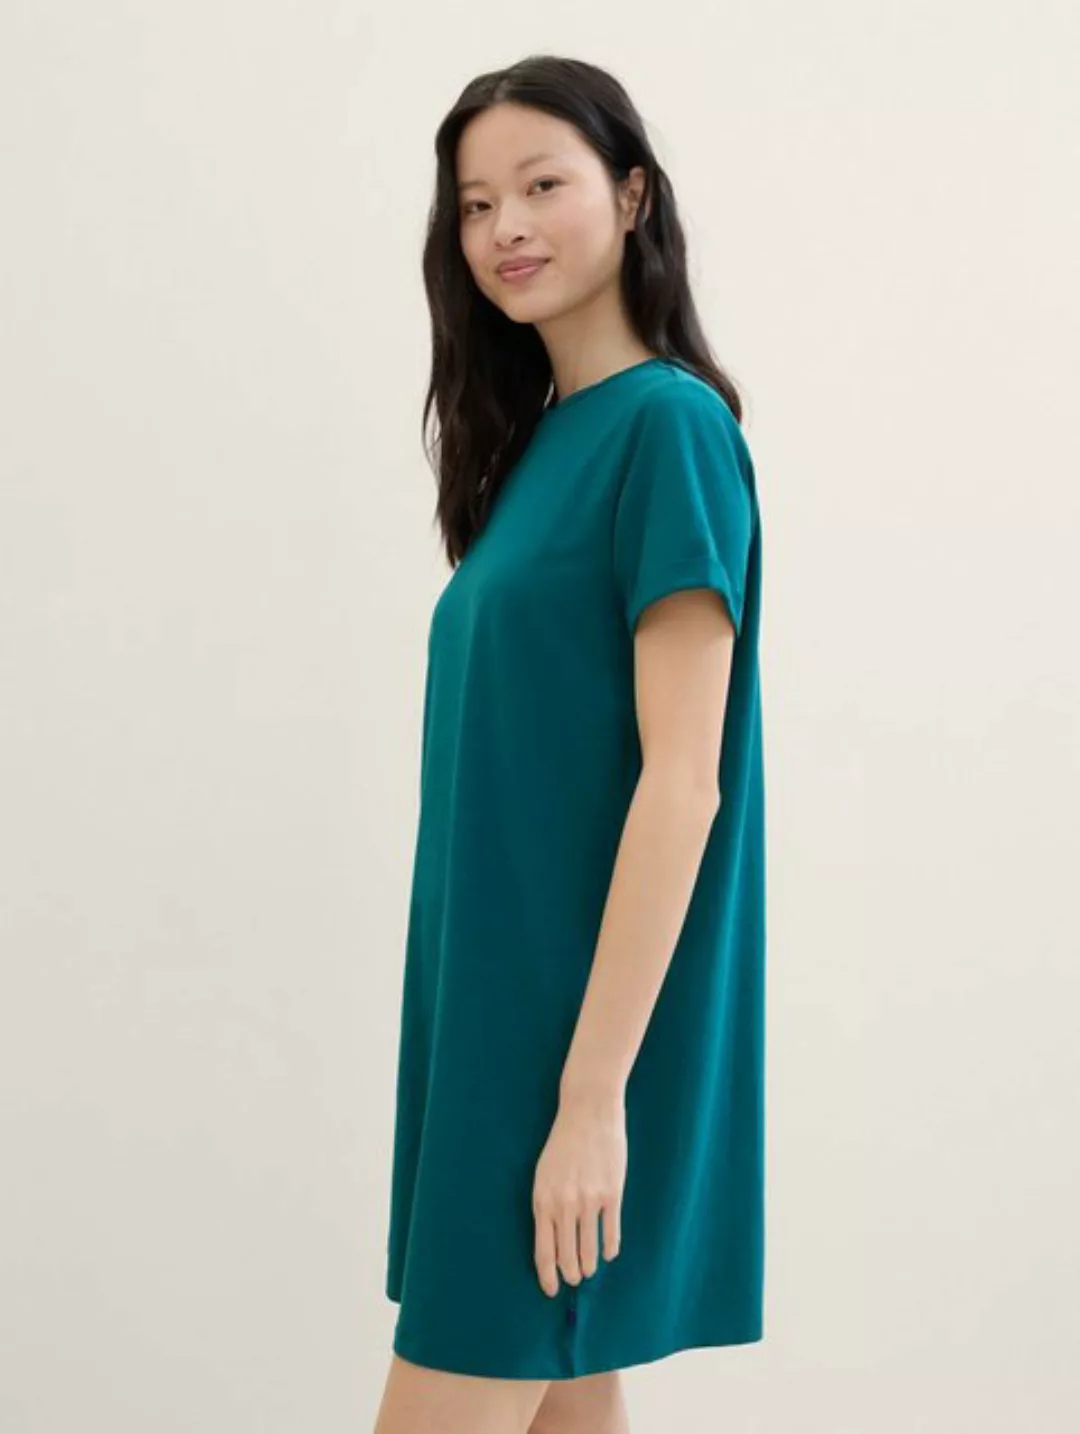 TOM TAILOR Denim Jerseykleid in Melange-Optik günstig online kaufen